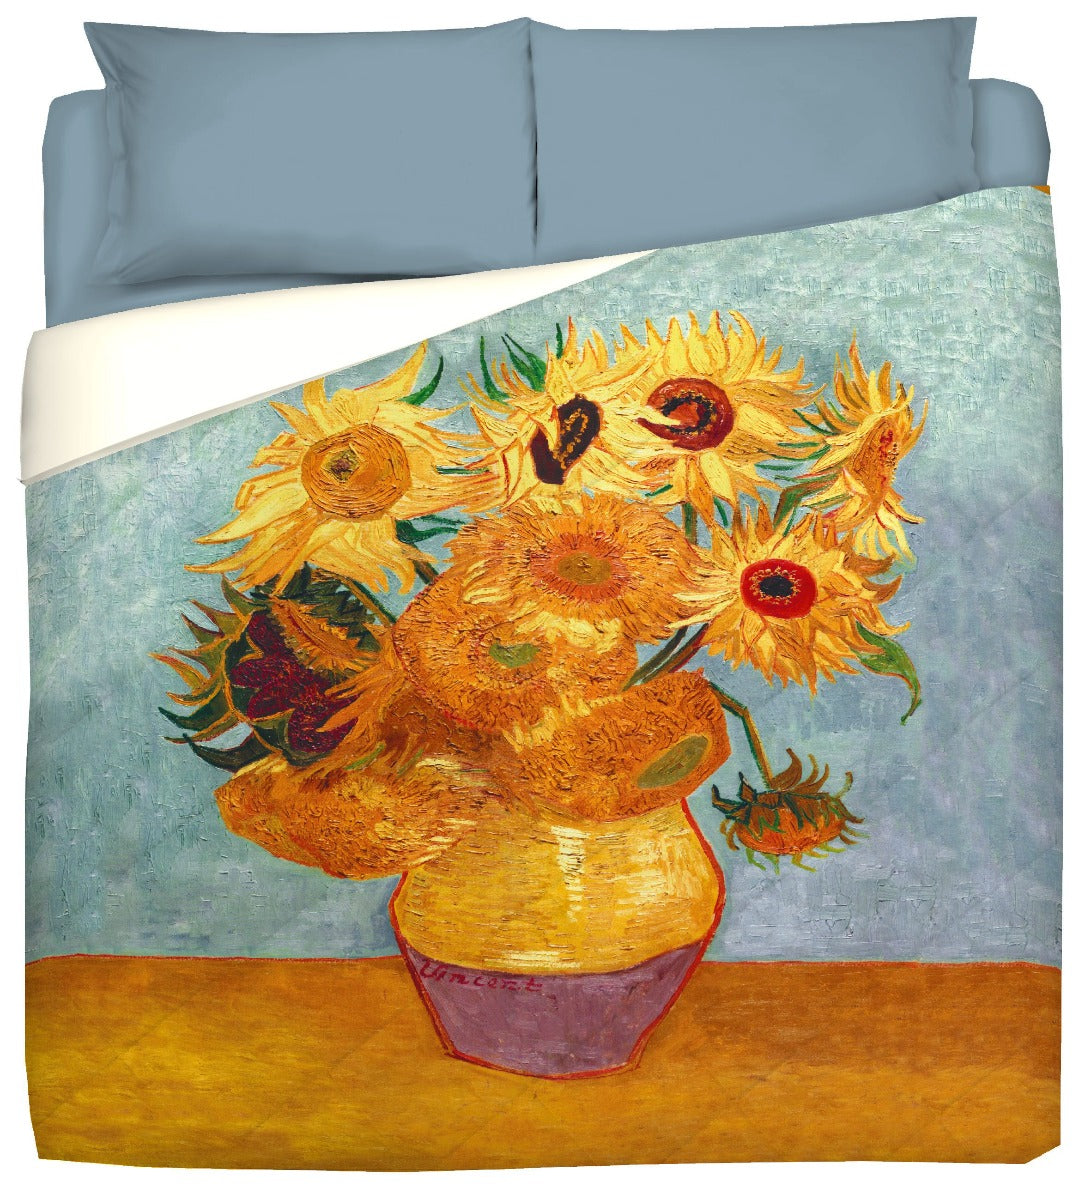 Winter Quilt - Van Gogh-Sunflowers